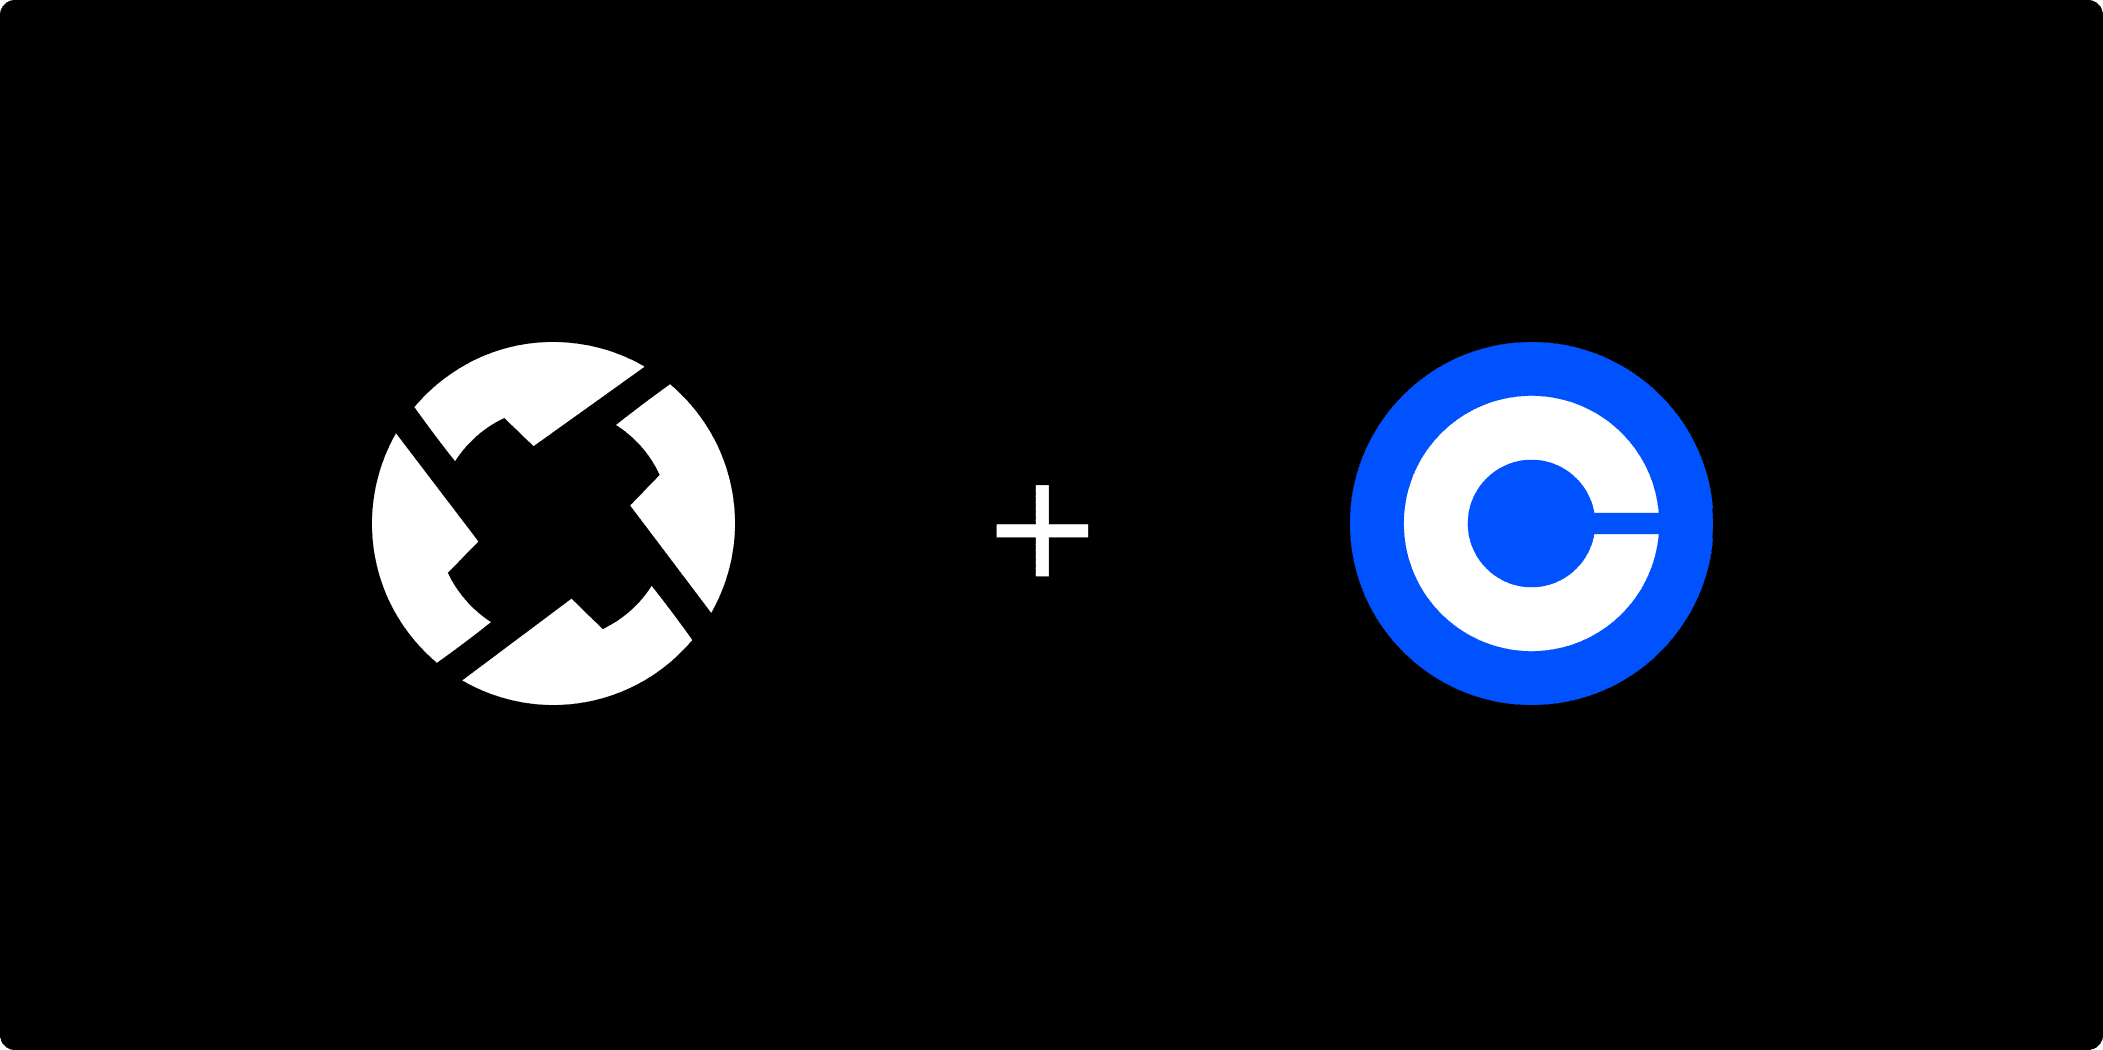 0x (ZRX) token jumps more than 50% intraday on news of Coinbase partnership